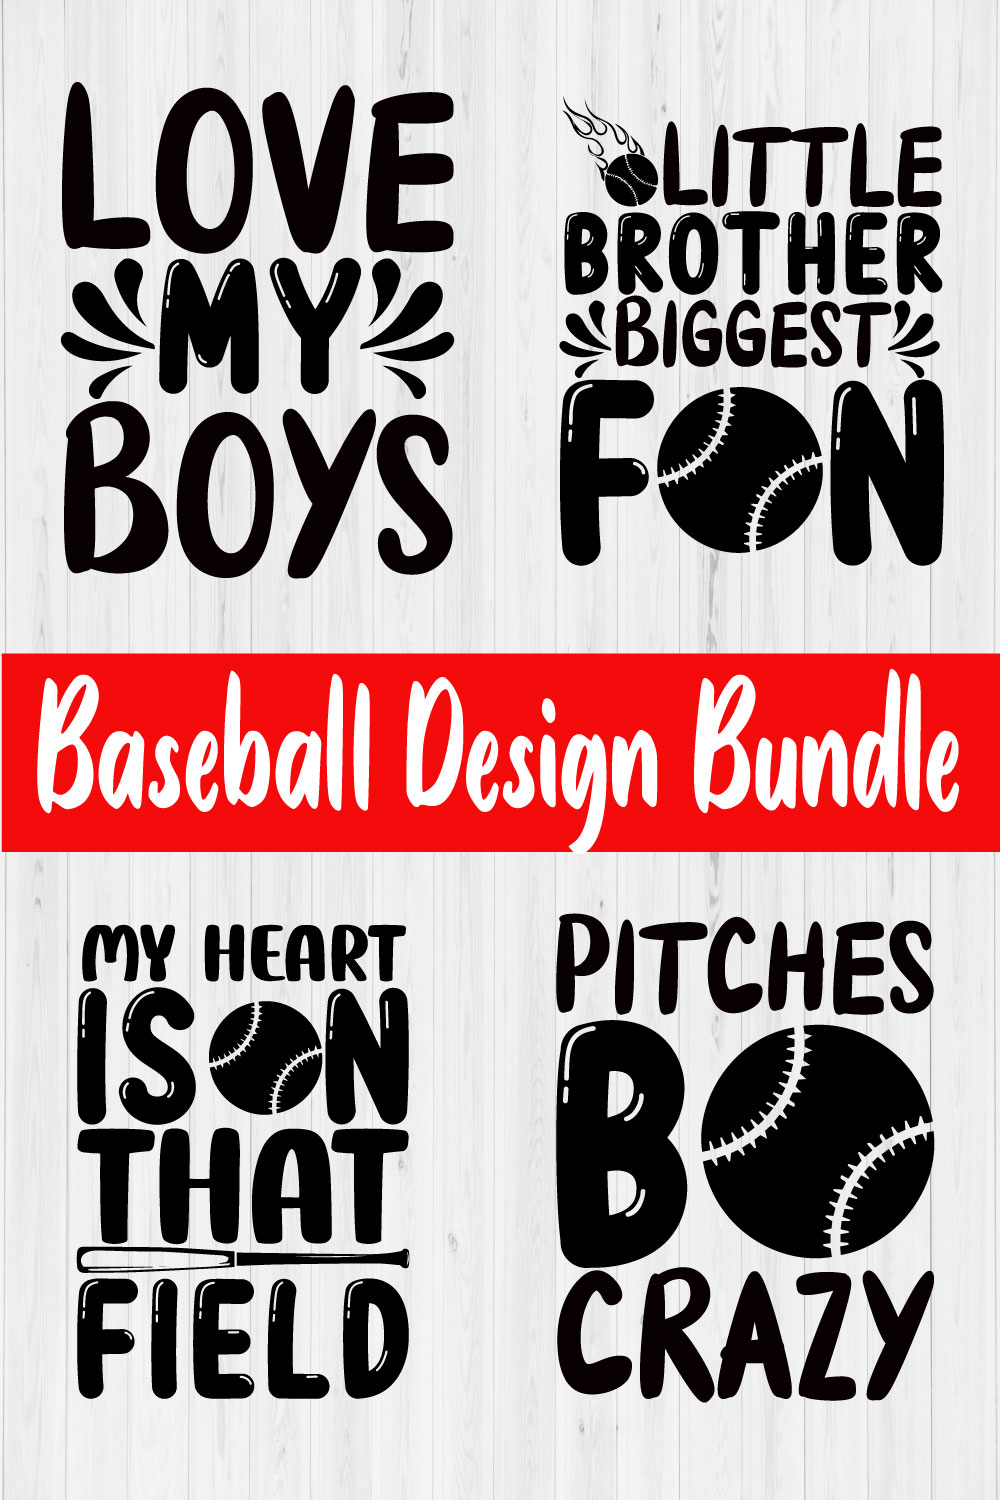 Baseball Design Bundle Vol2 pinterest preview image.